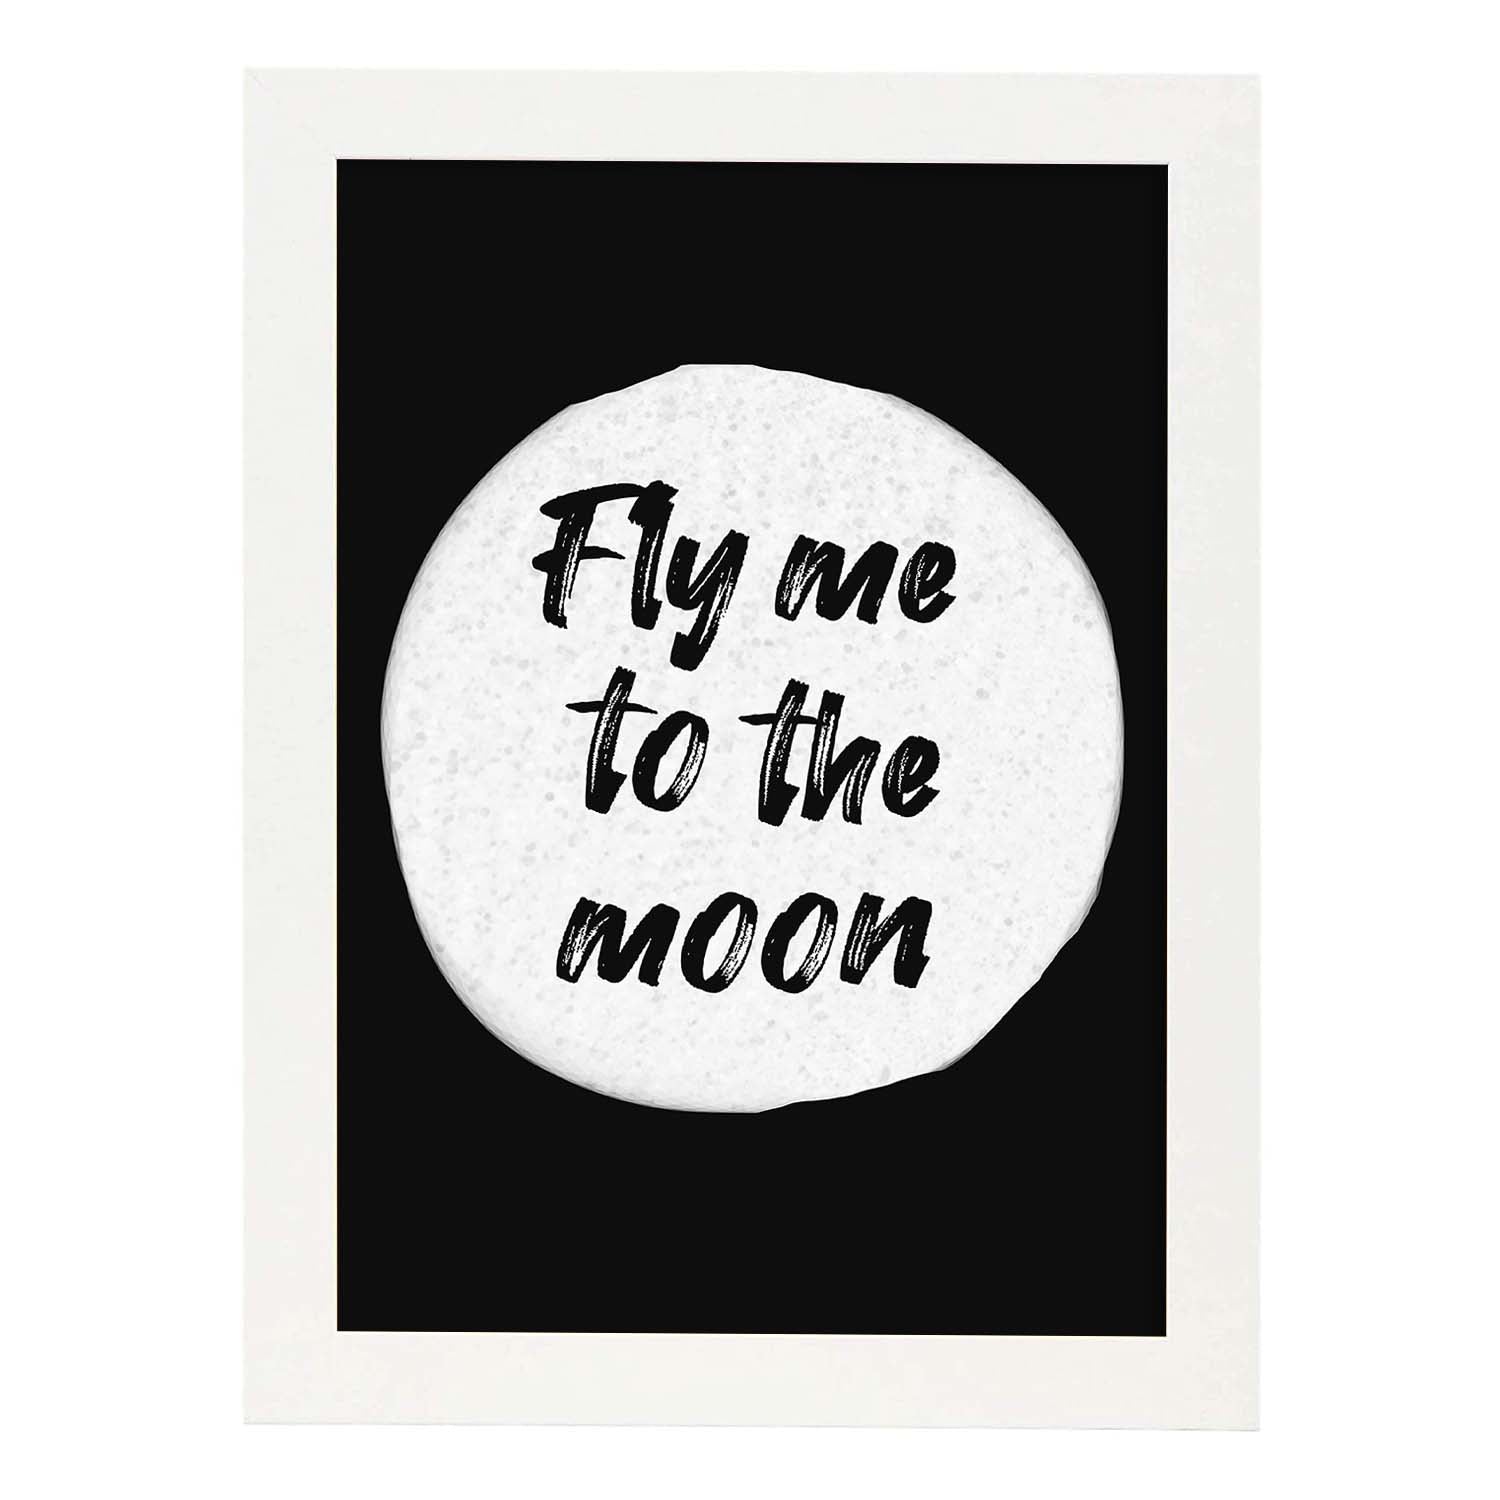 Lamina artistica decorativa con ilustración de fly me to the moon estilo Mensaje inspiracional-Artwork-Nacnic-A3-Marco Blanco-Nacnic Estudio SL